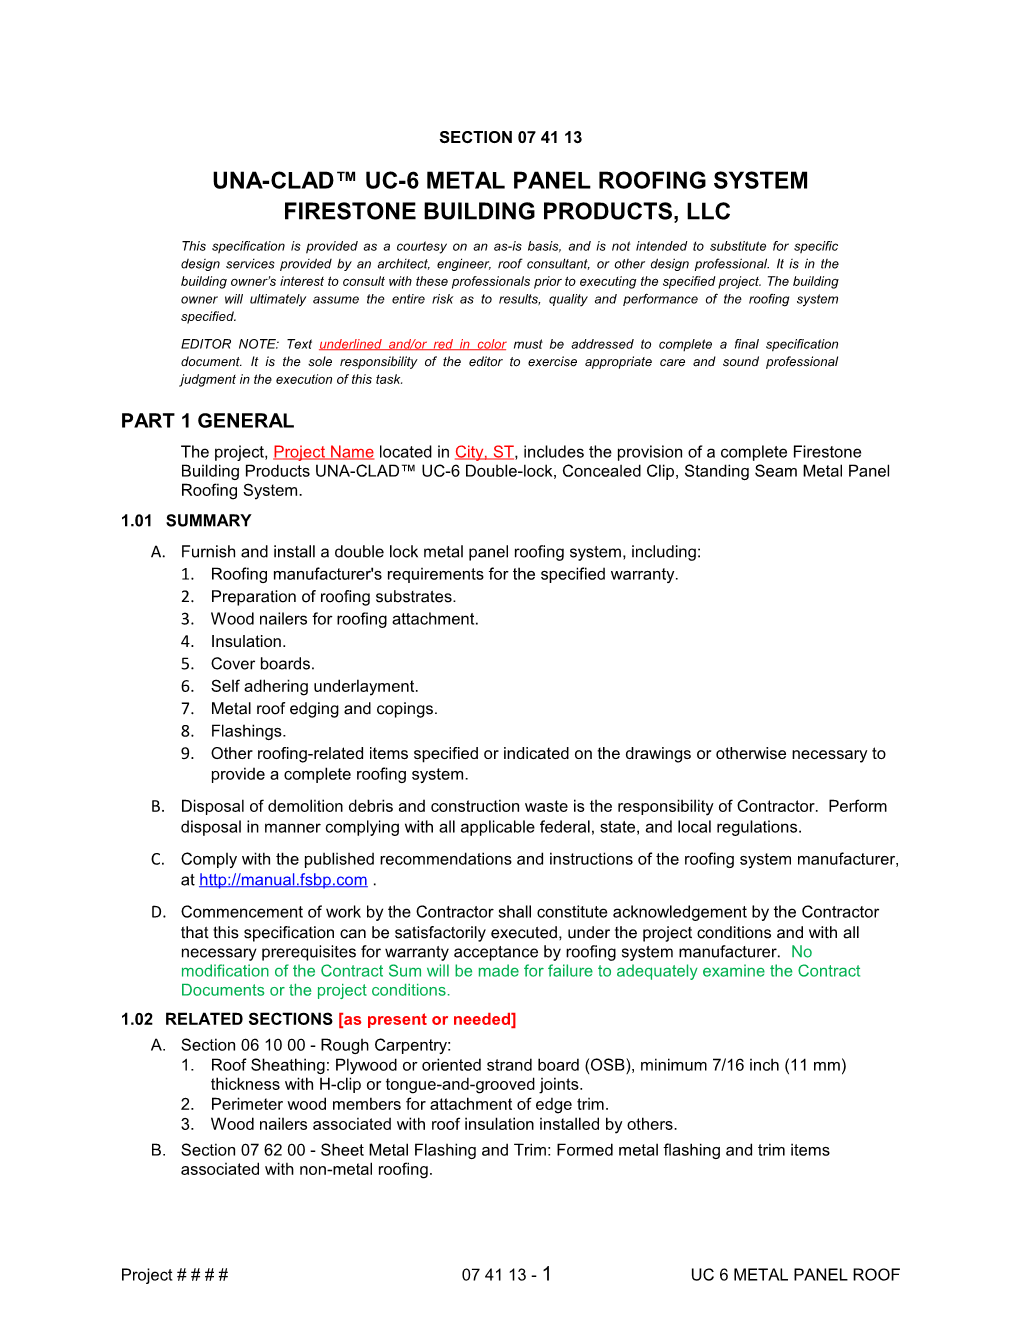 Una-Clad Uc-6 Metal Panelroofing System